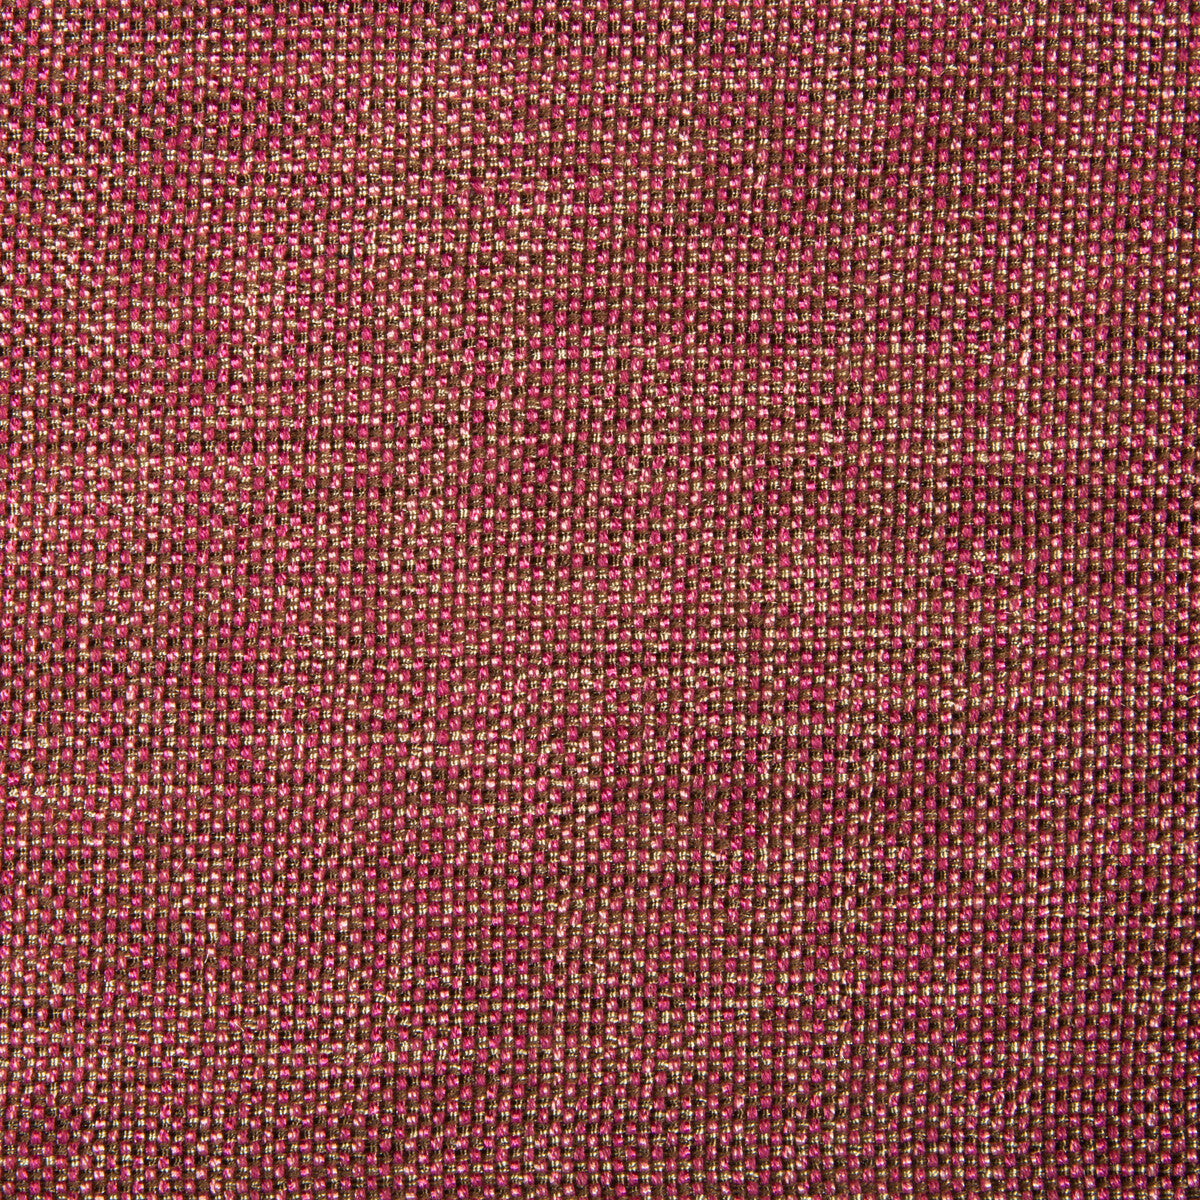 Kravet Smart fabric in 34939-617 color - pattern 34939.617.0 - by Kravet Smart